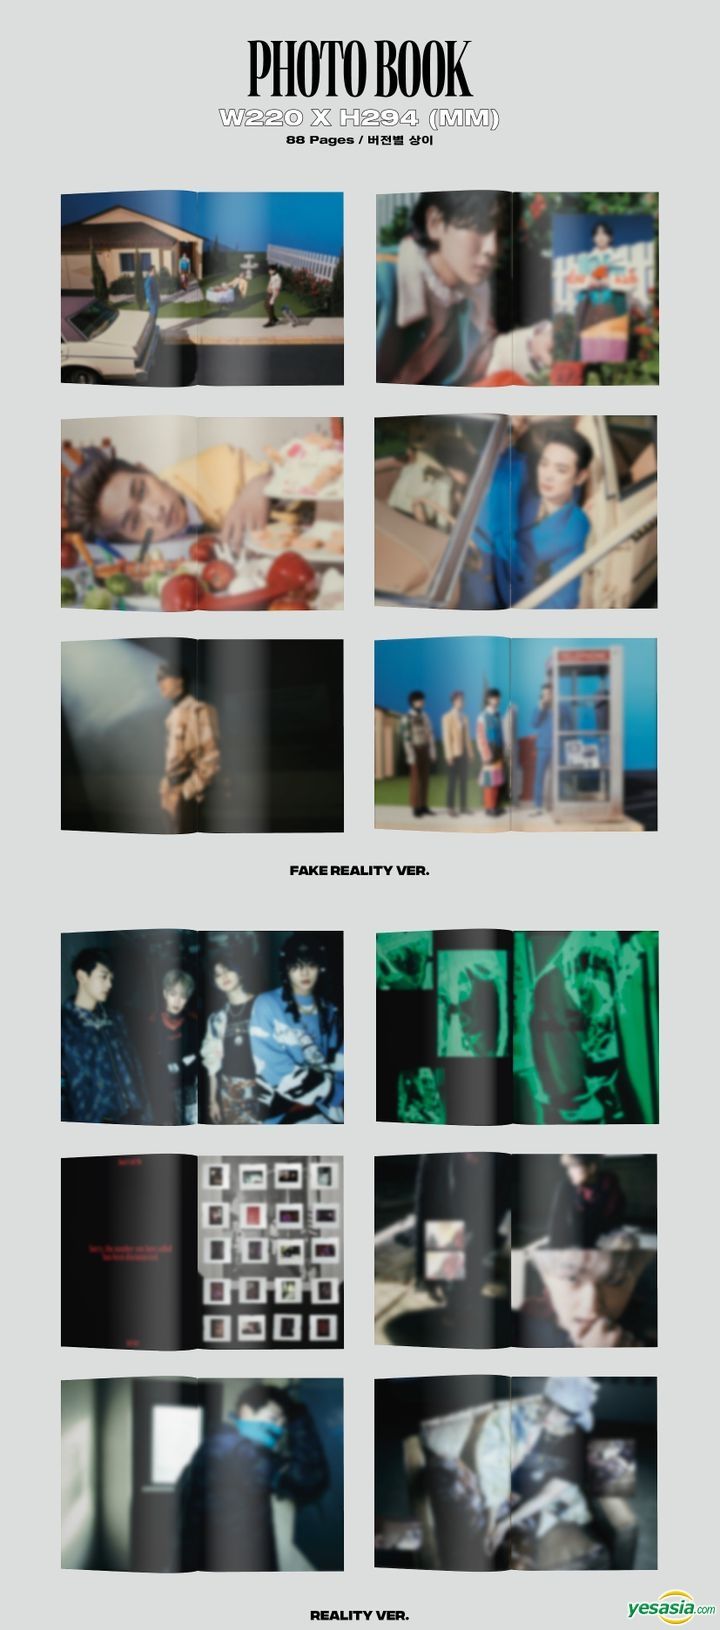 Yesasia Shinee 7thアルバム Don T Call Me Photobook Ver ランダムジャケット Cd Shinee シャイニー Smエンタテインメント 韓国の音楽cd 無料配送